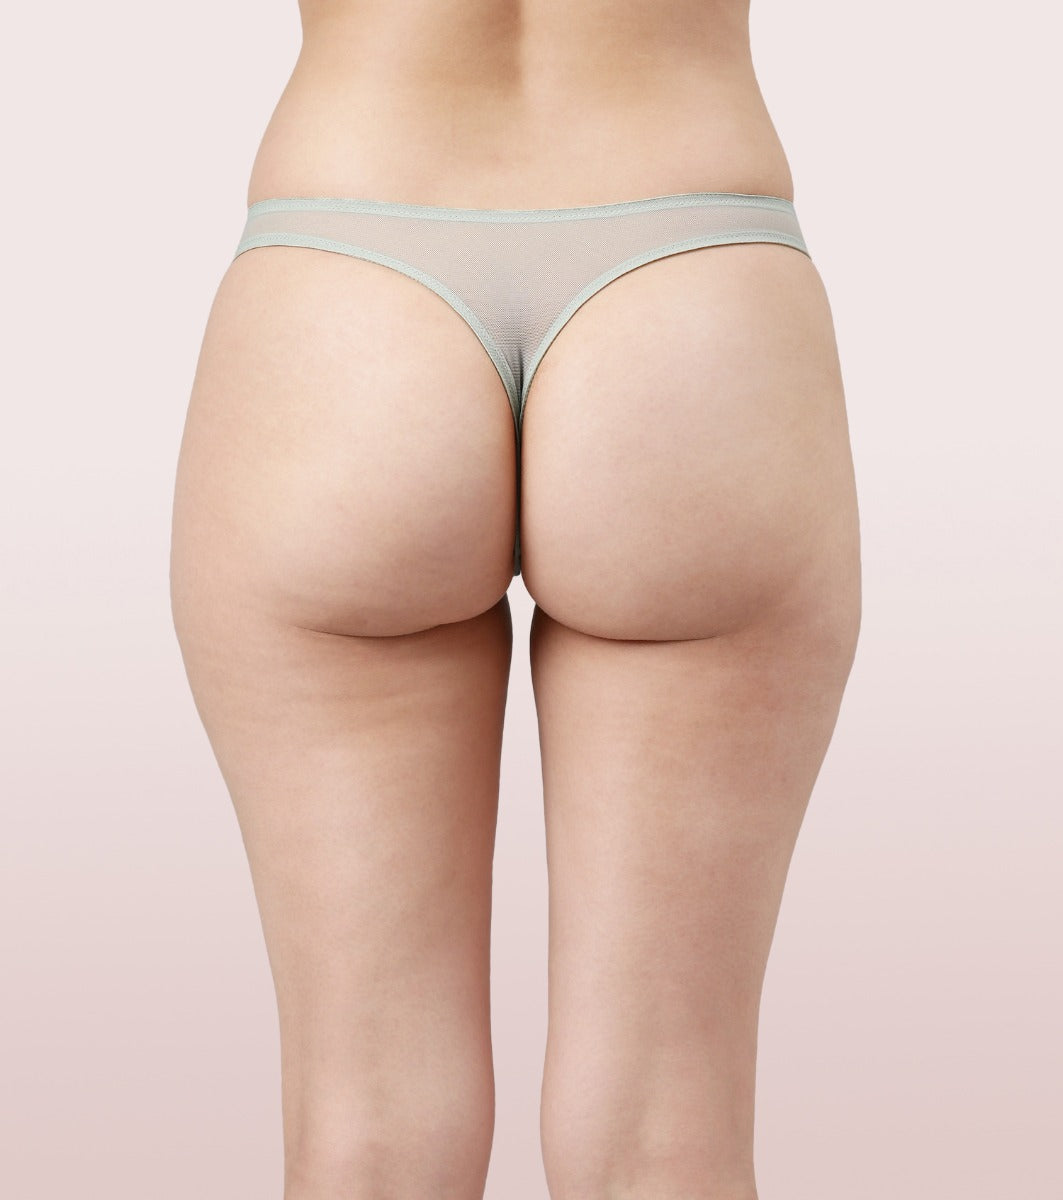 Enamor women's low waist style panty online--Magenta Thai